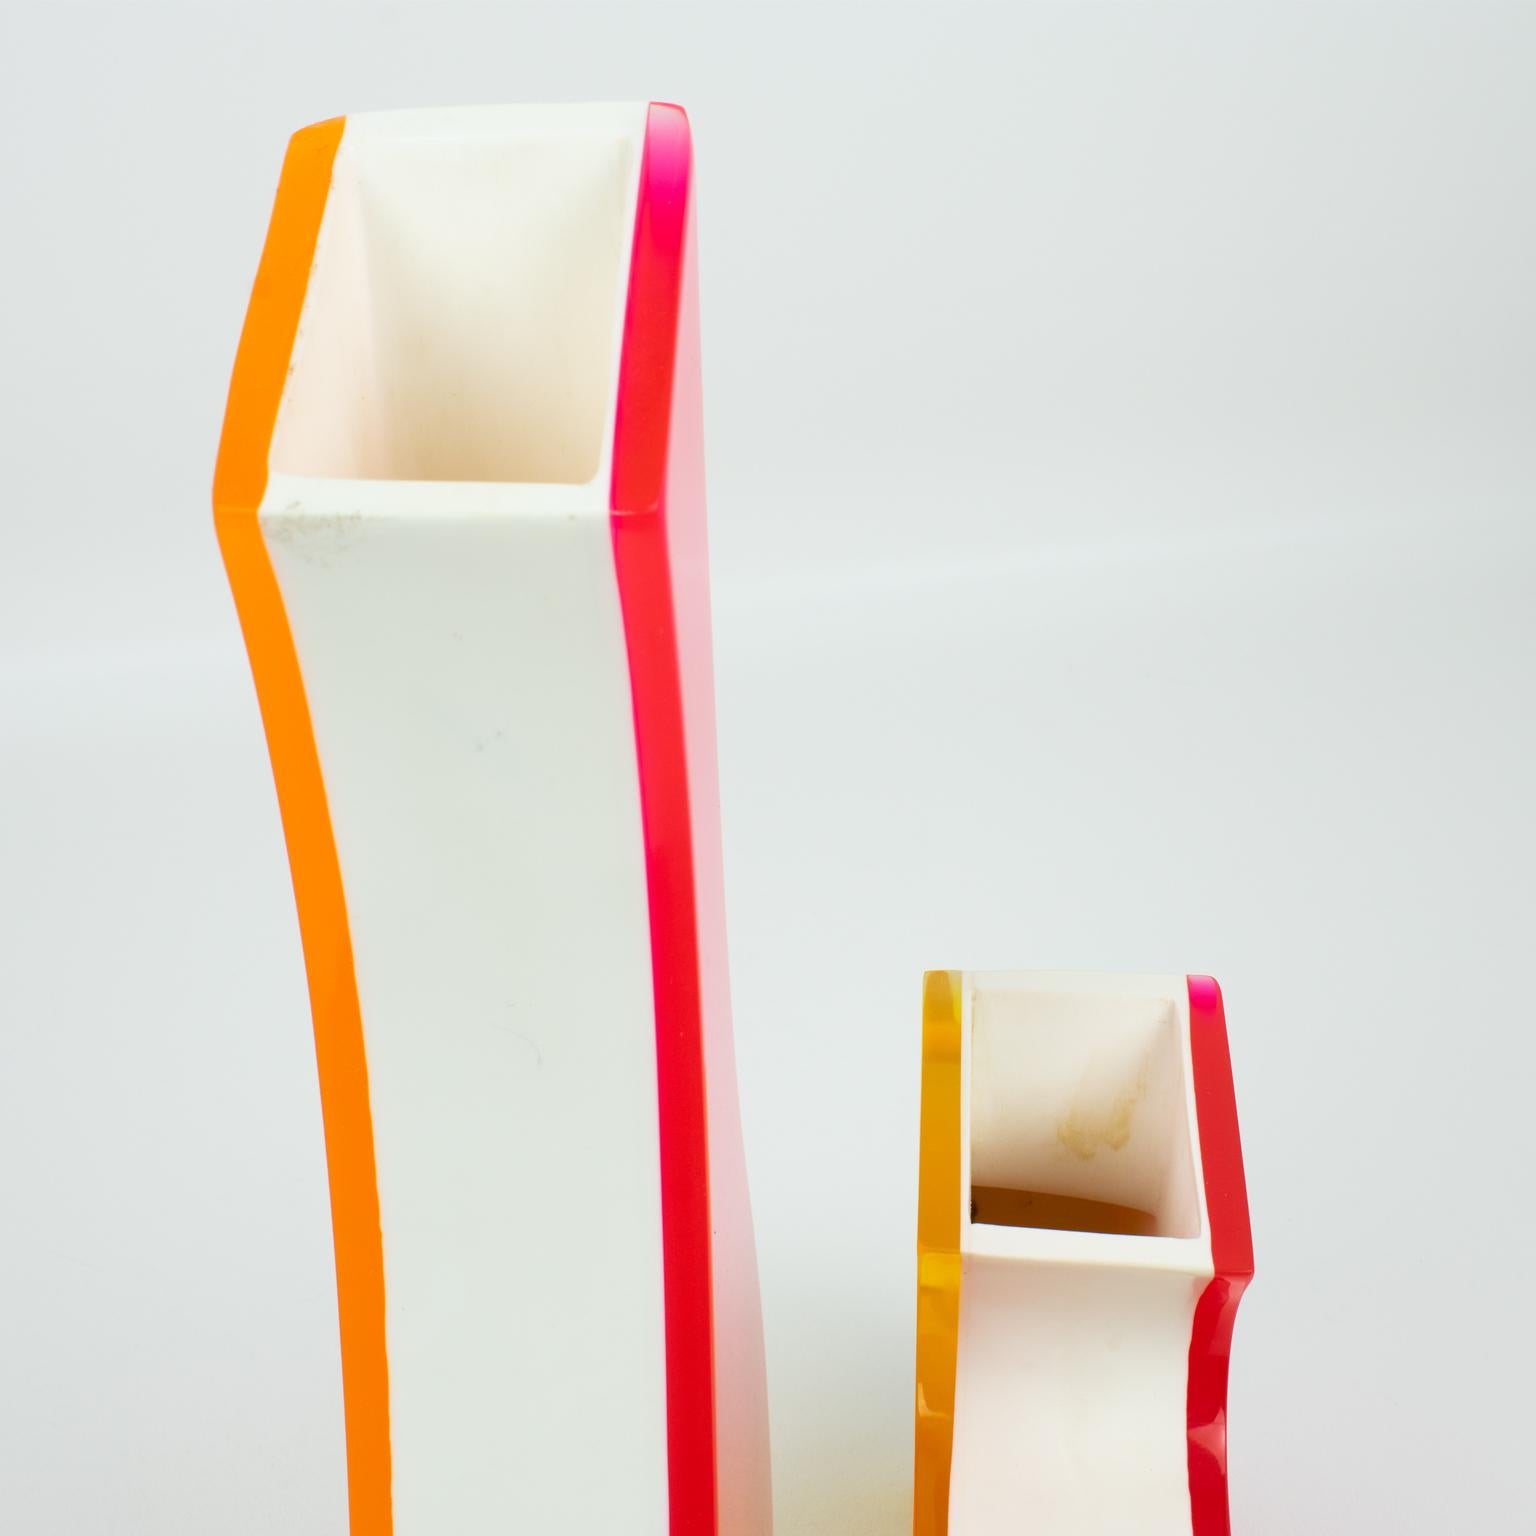 Acrylic Villeroy & Boch Neon Color-block Lucite Vase, set of 2, 1990s For Sale